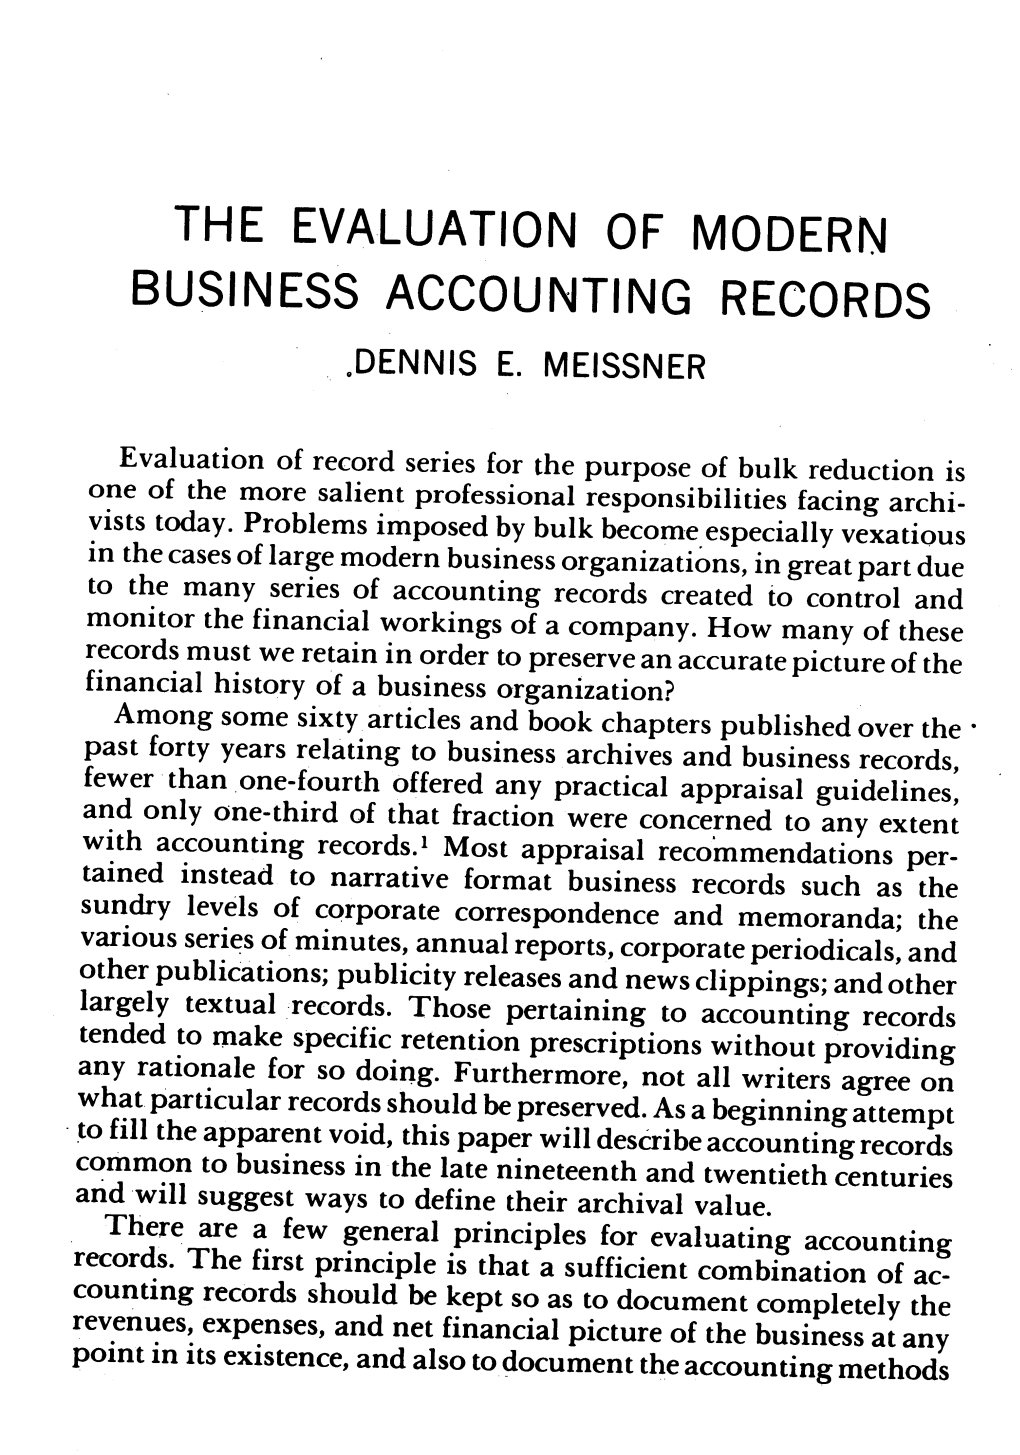 Business Accounting Records .Dennis E